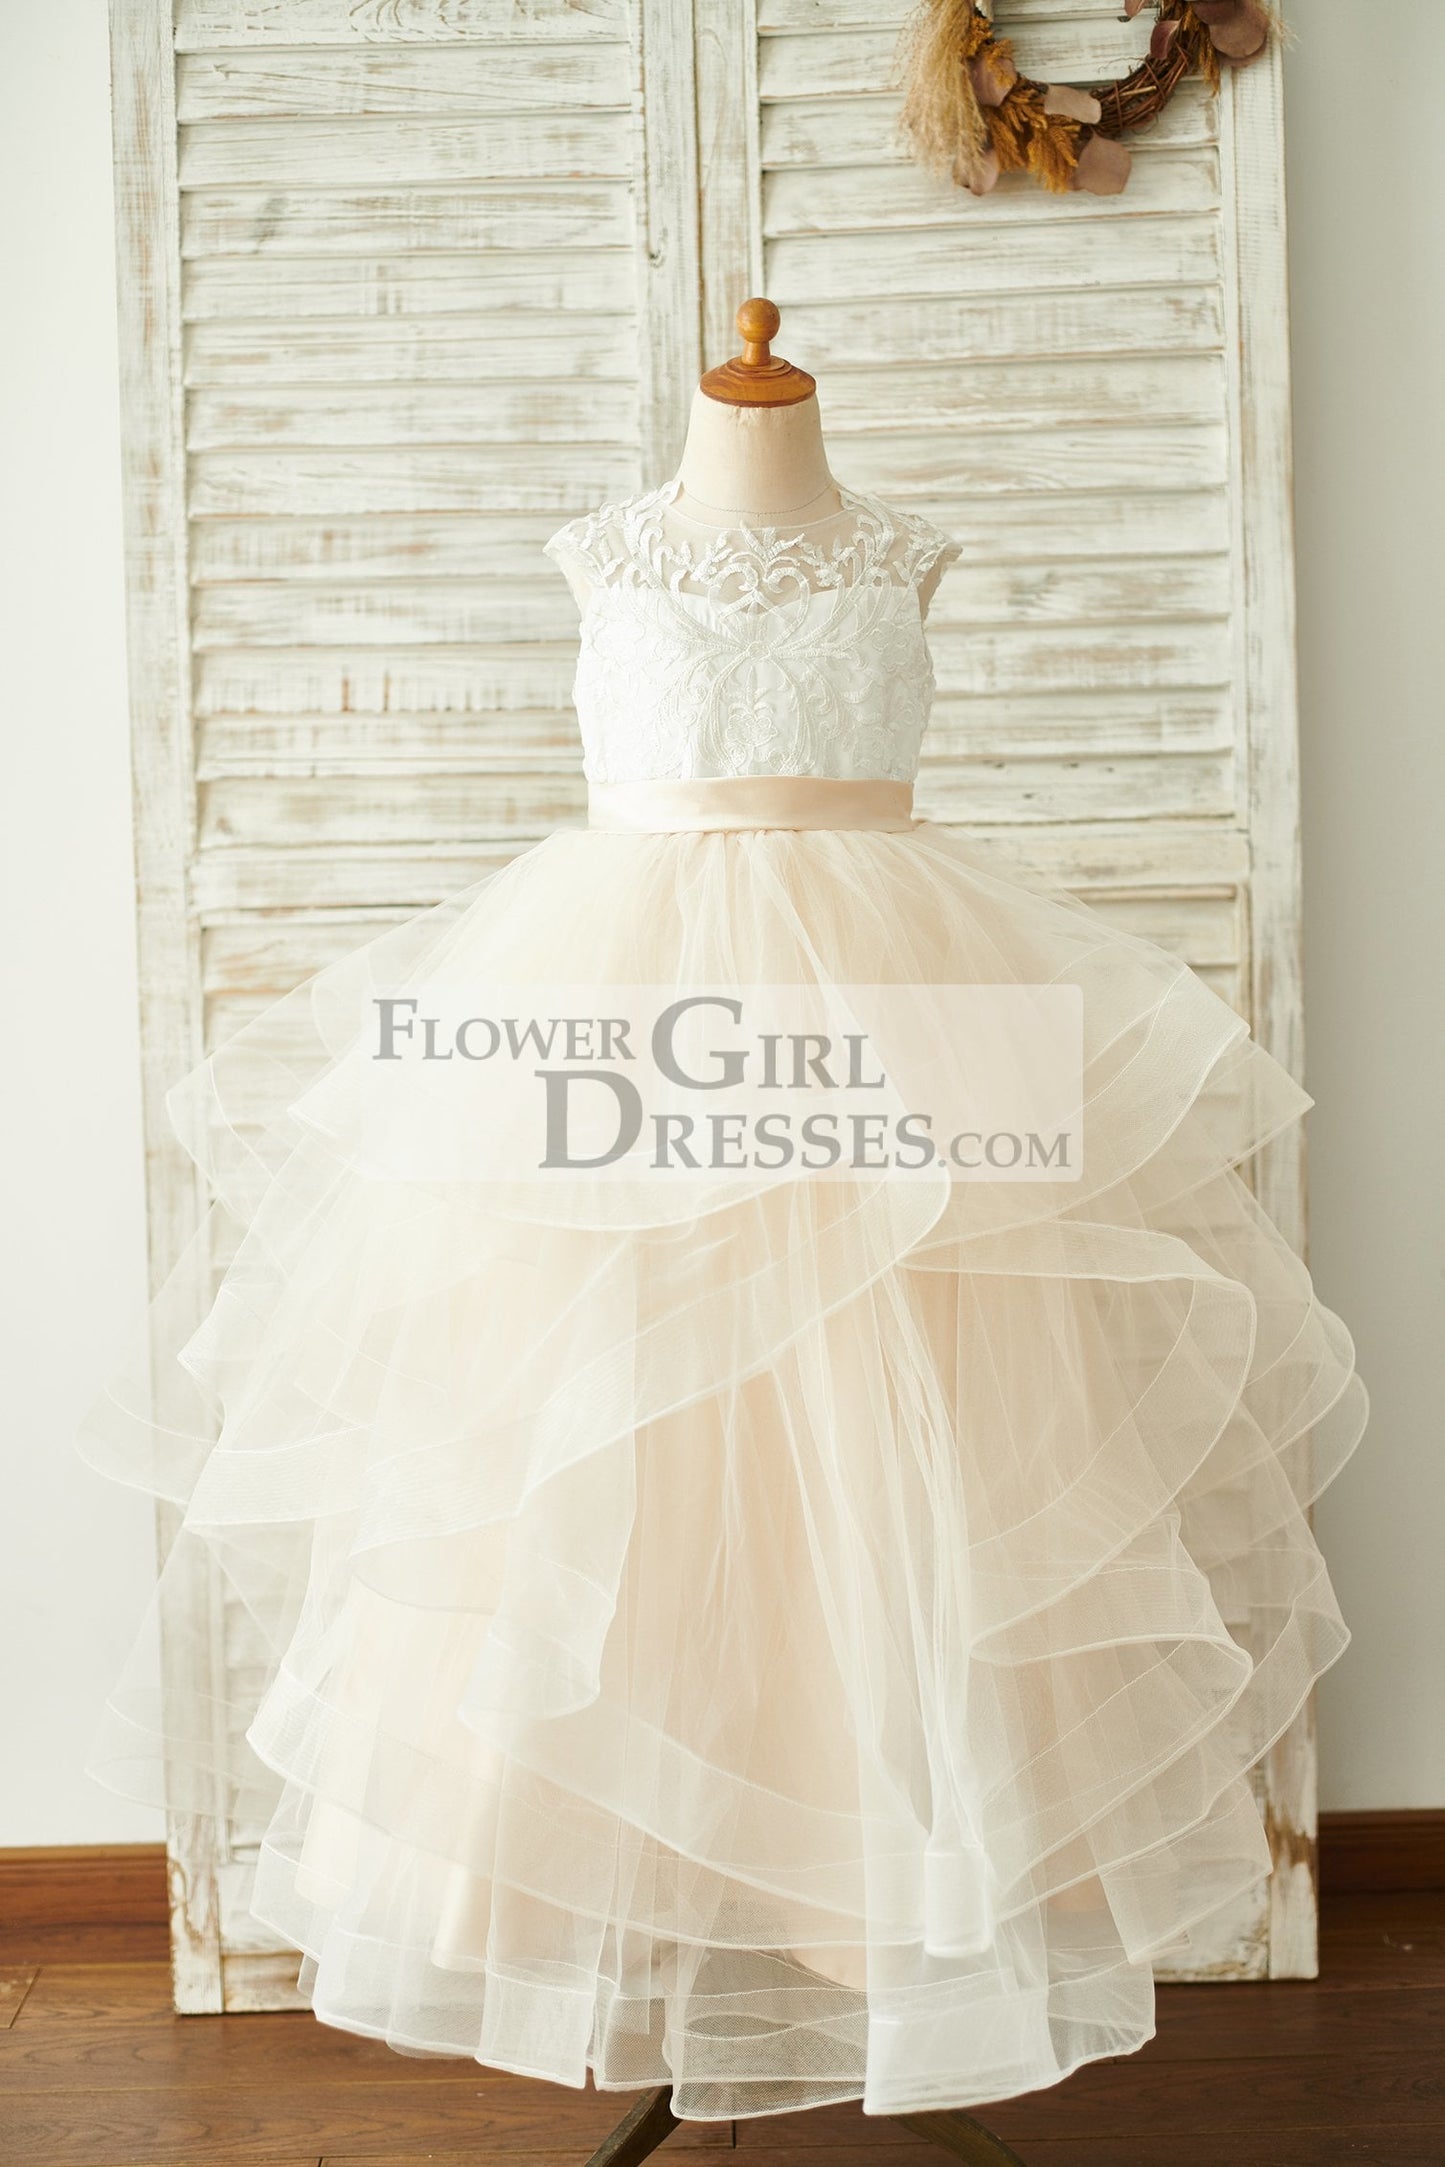 Ivory Lace Champagne Tulle Floor Length Wedding Flower Girl Dress